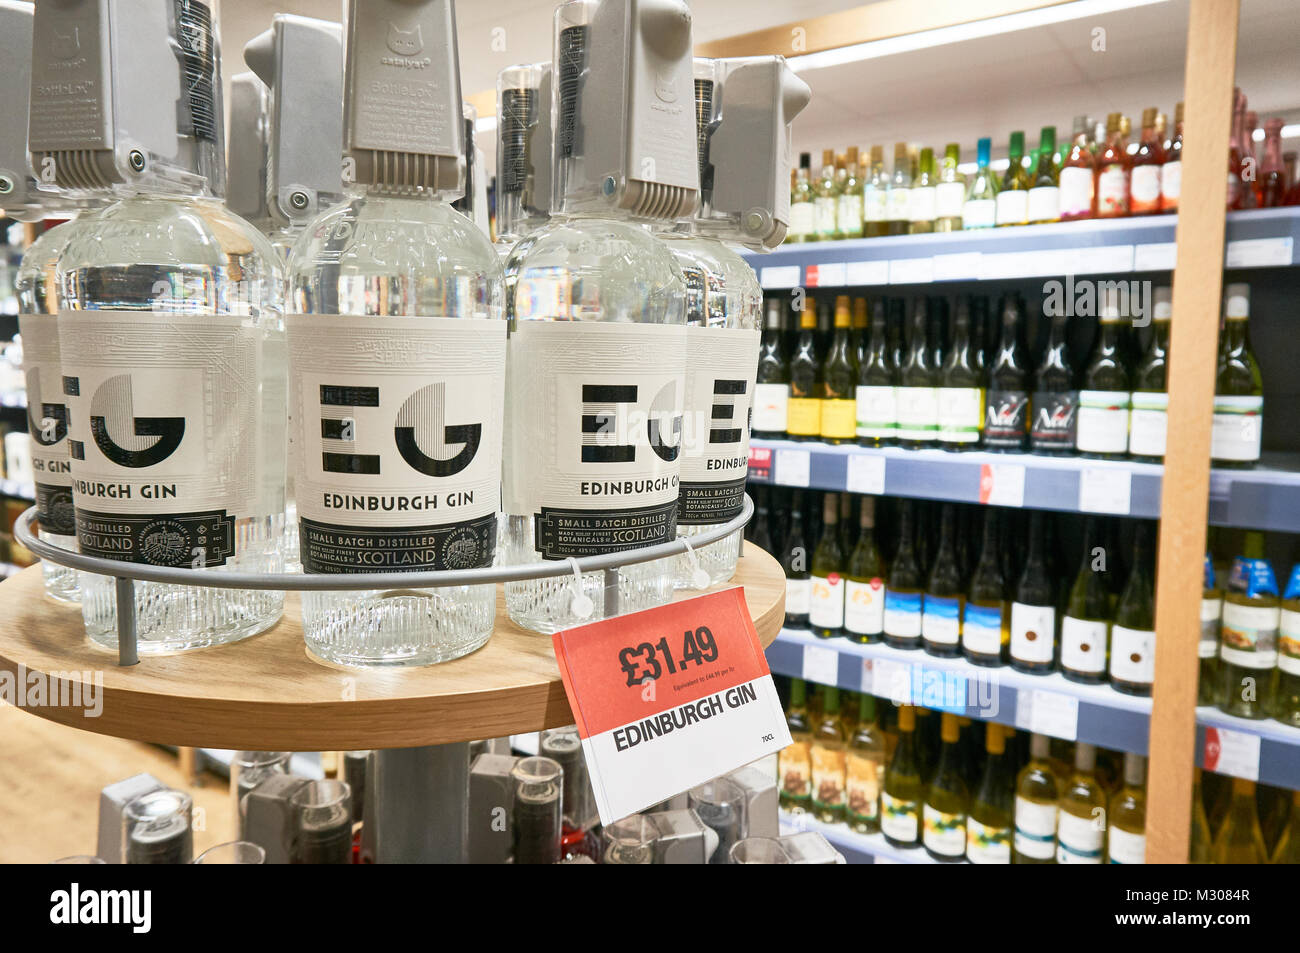 Bottles of artisan Edinburgh Gin on display in a local Cooperative store, Glasgow, UK. Stock Photo